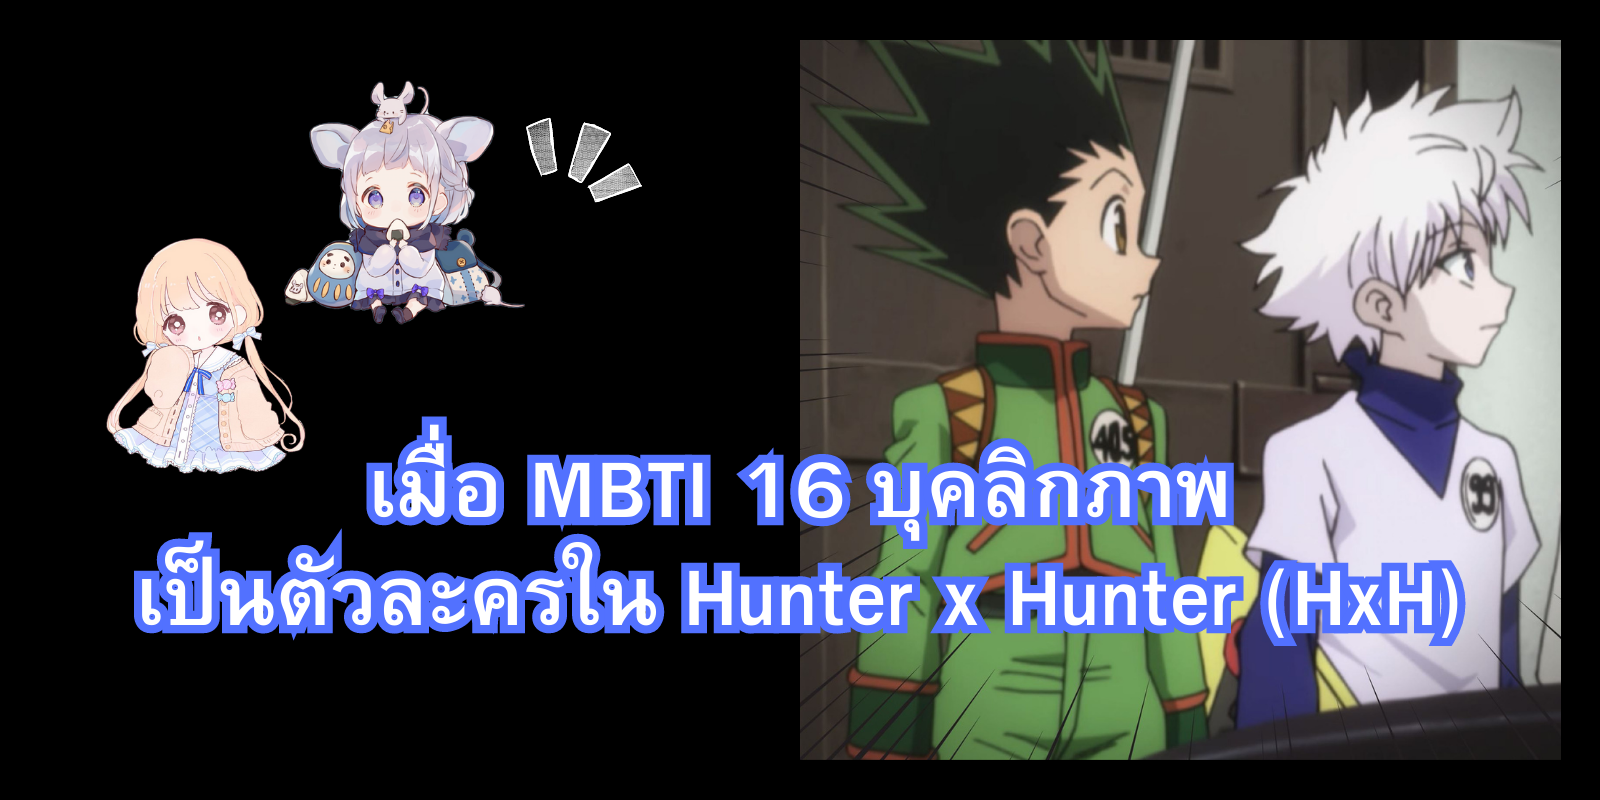 16 personalities of HxH  Hunter x hunter, 16 personalities, Mbti character